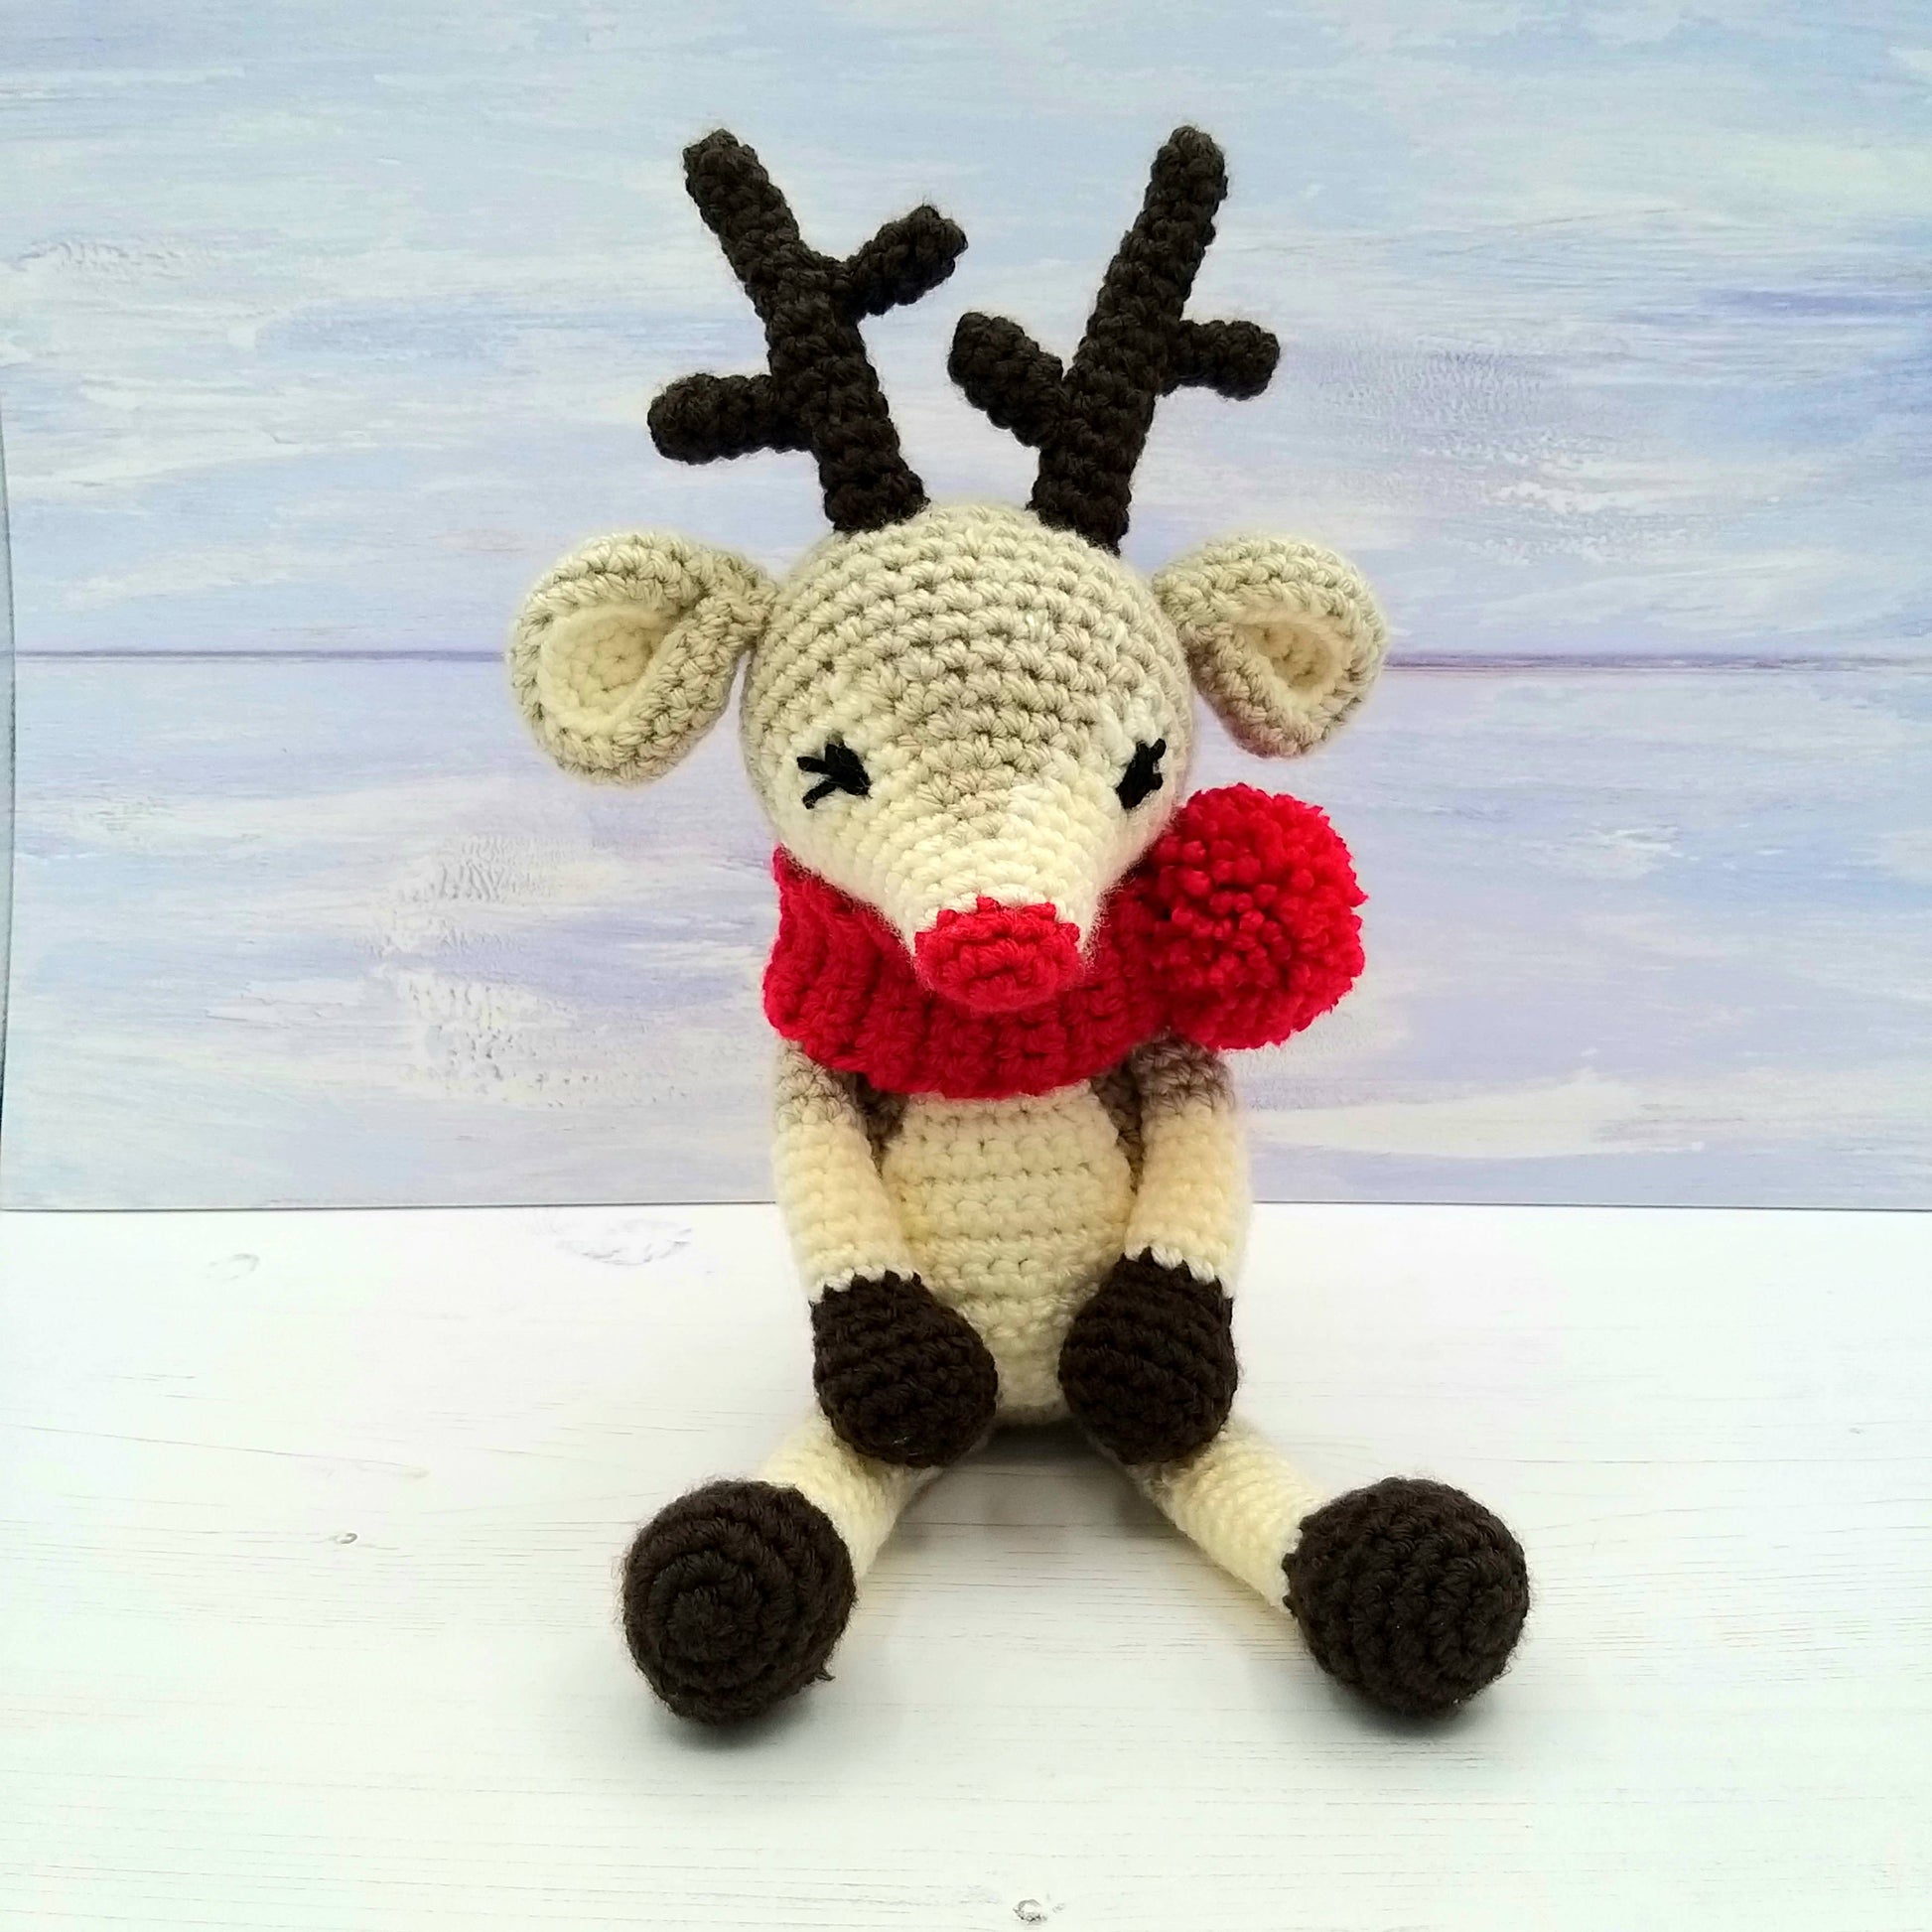 Finished Crochet Reindeer - Amigurumi